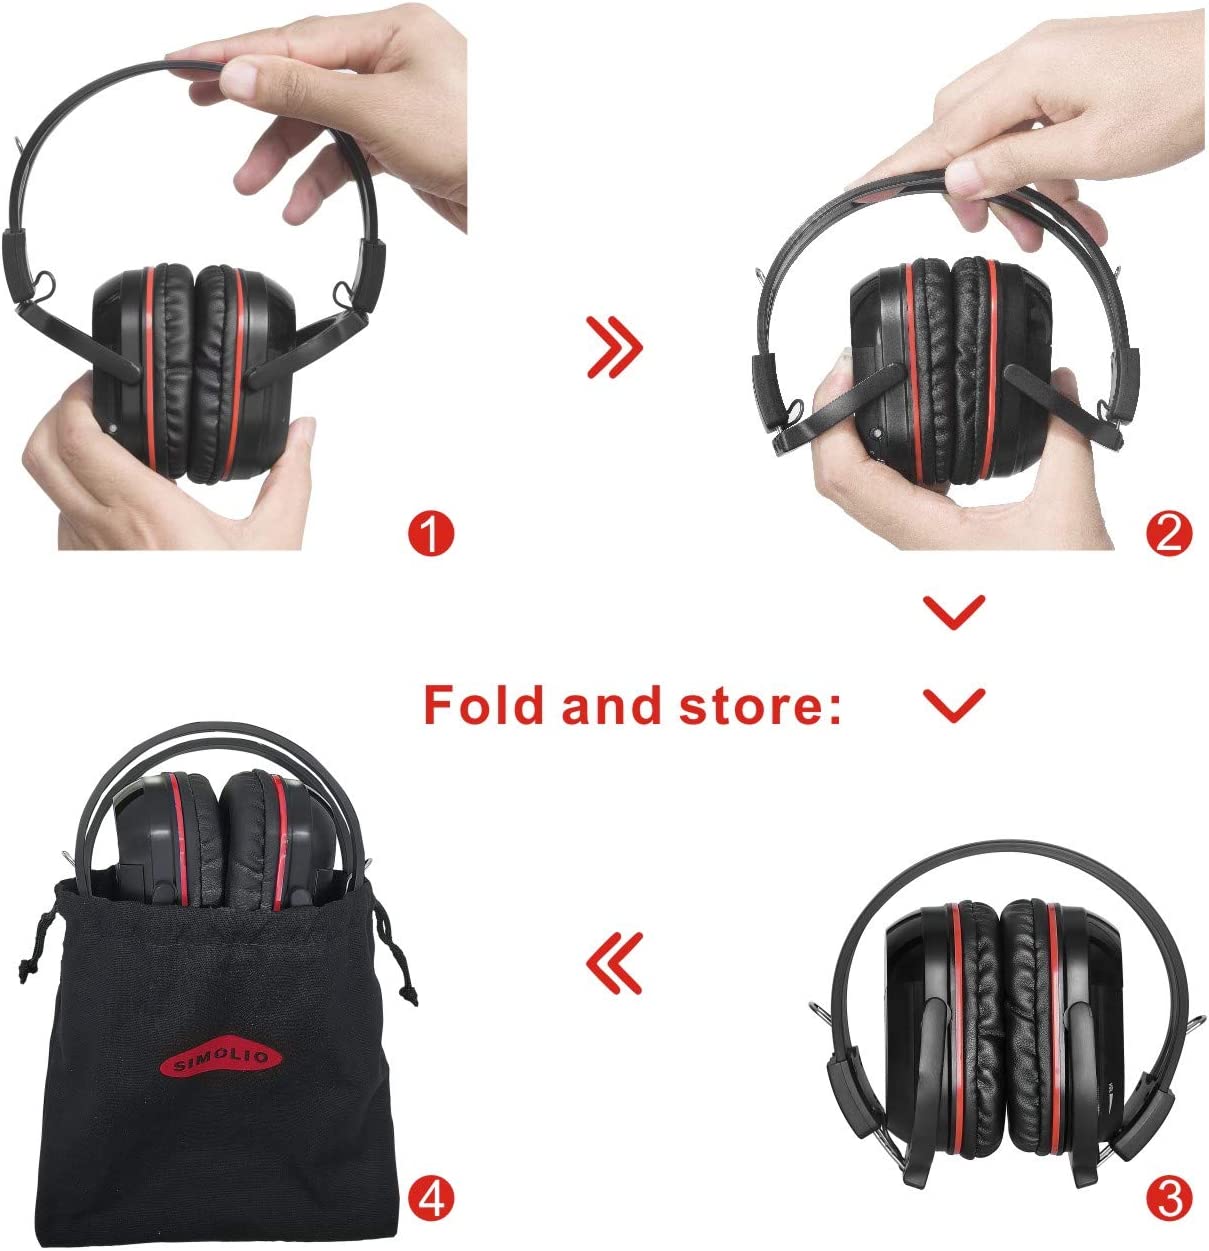 How to fold and store simolio wireless car headphones SM-563